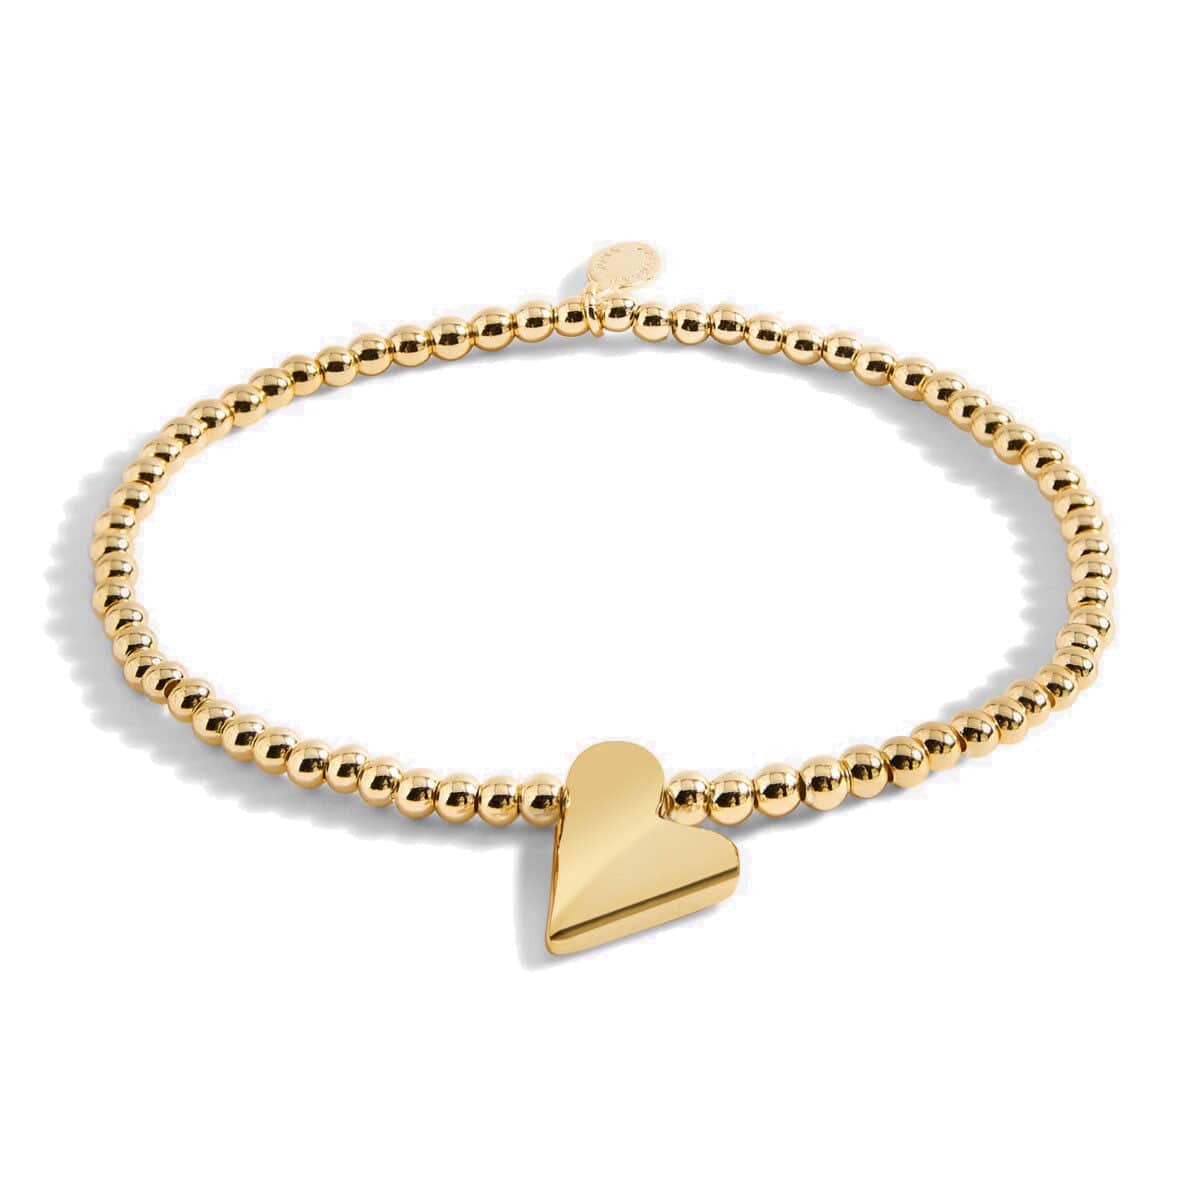 Joma Jewellery Bracelet Joma Jewellery Gold Plated Bracelet - A Little Best Friend